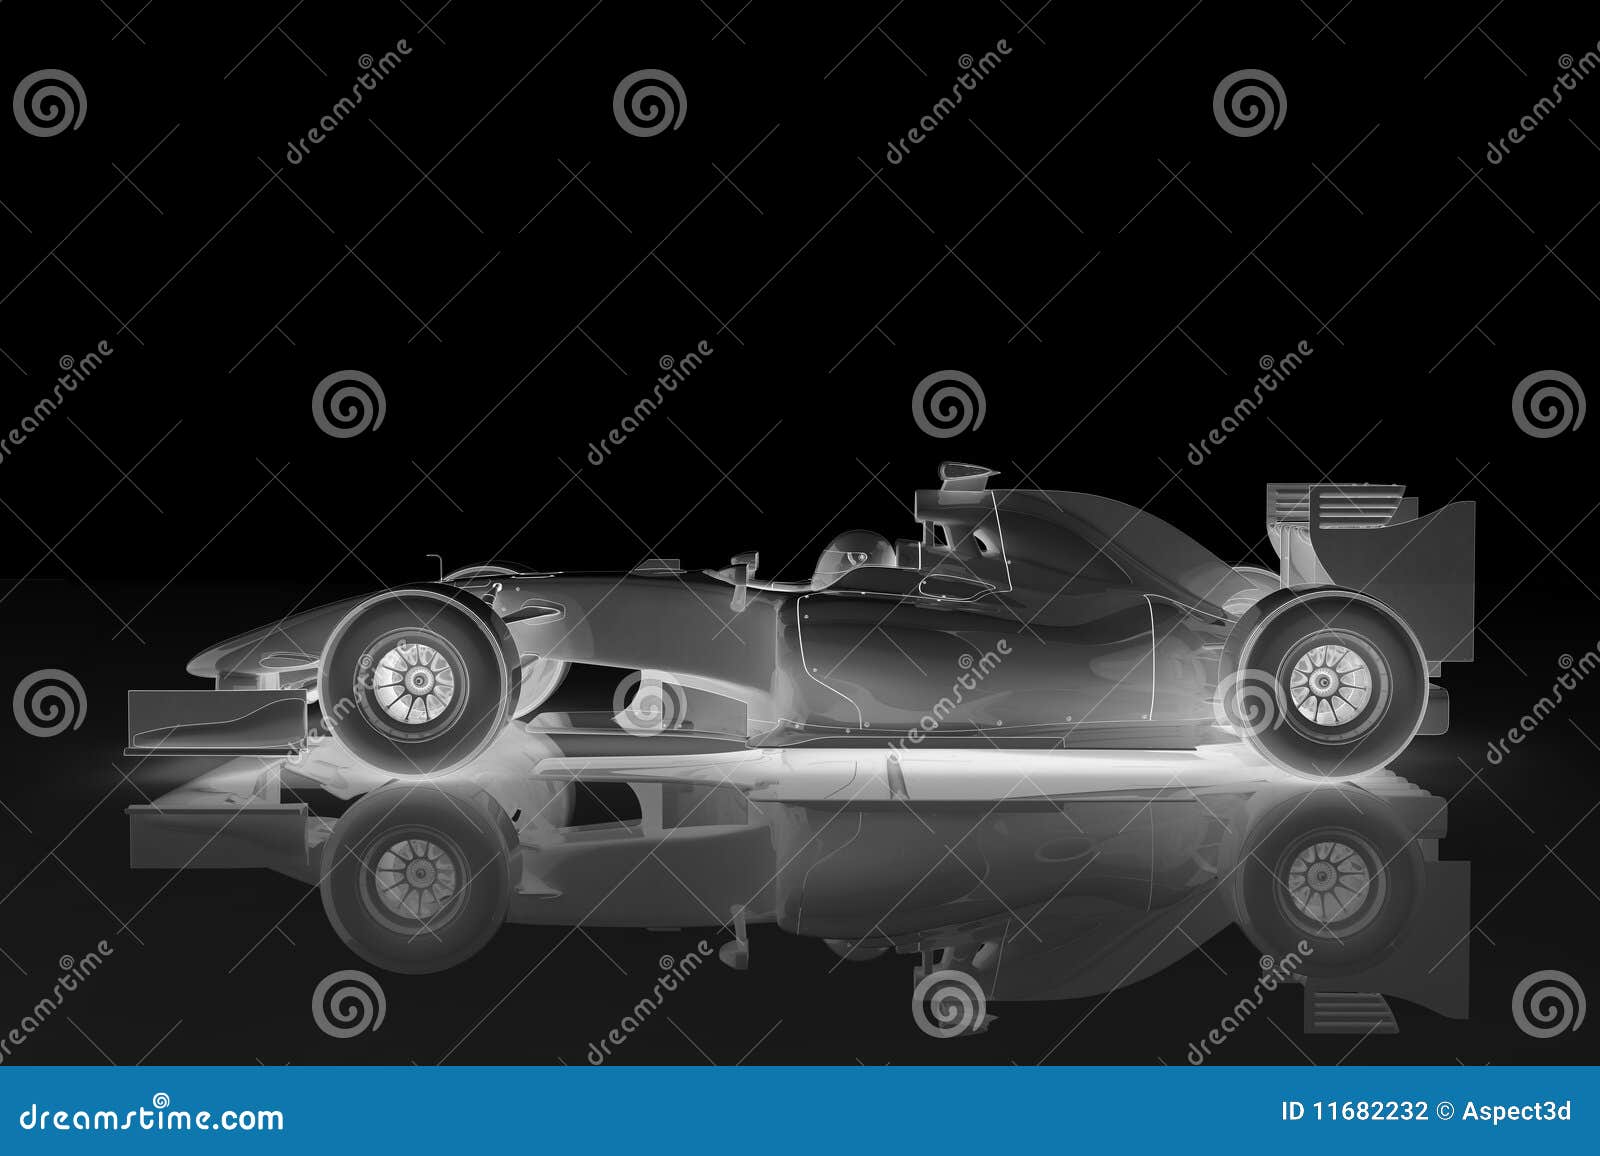 F1 Car stock illustration